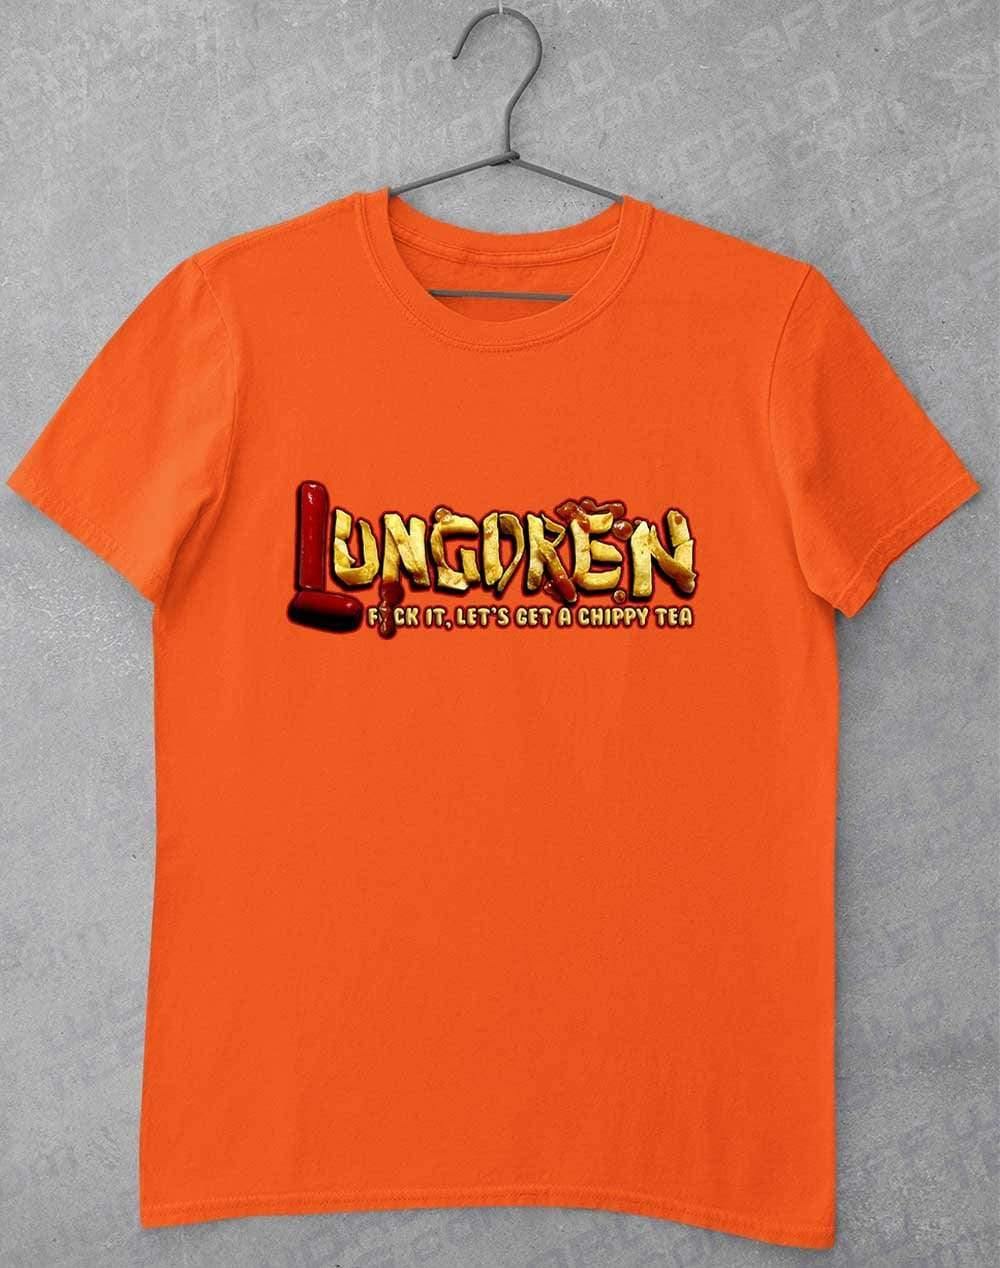 LUNGDREN Chippy Tea - T-Shirt S / Orange  - Off World Tees